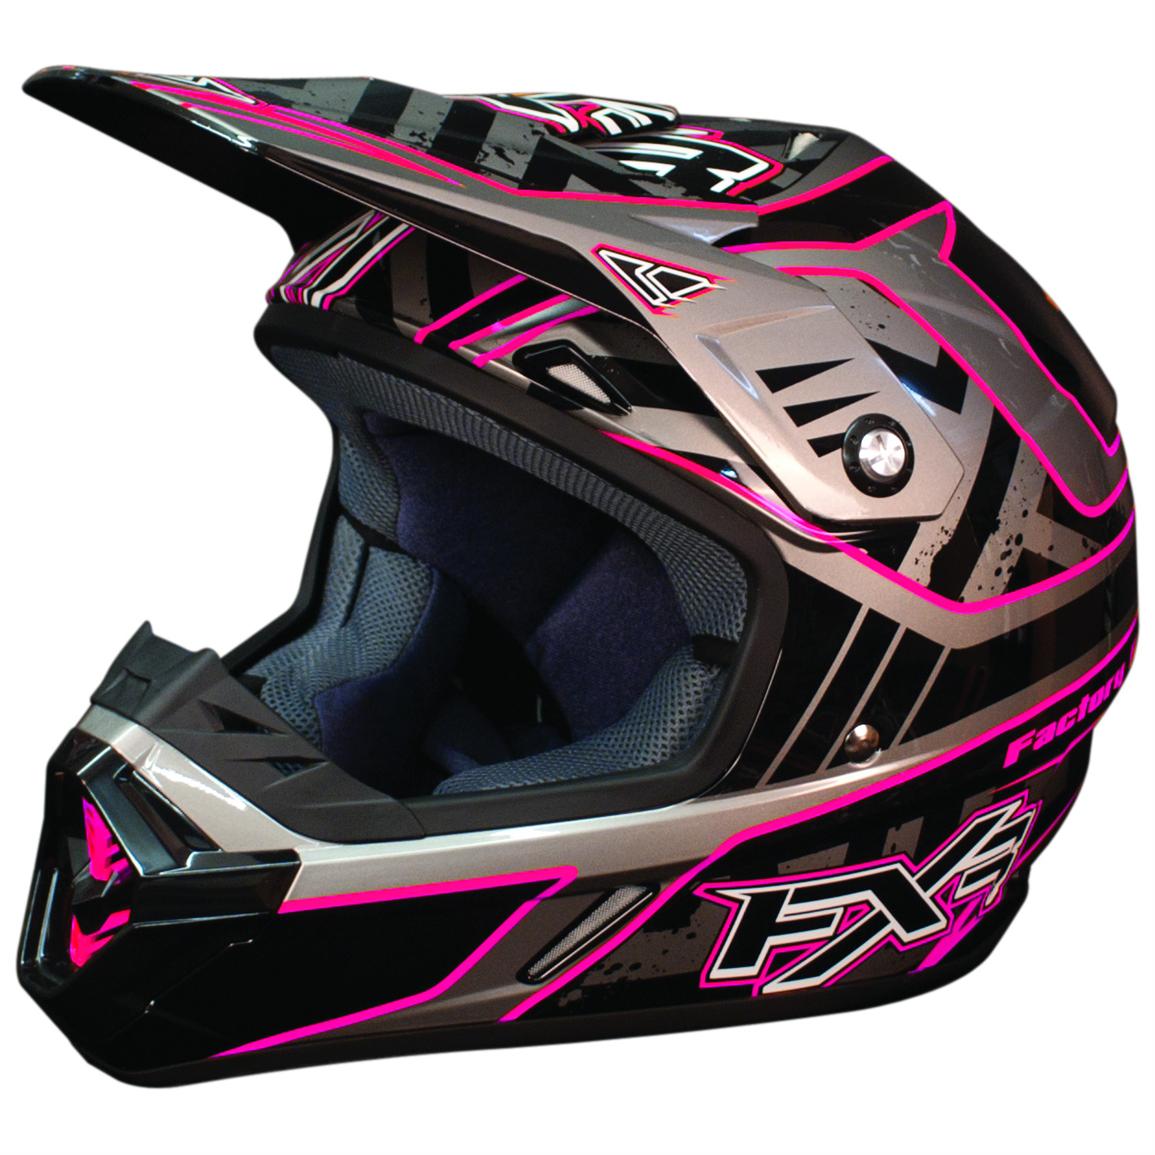 FXR® Premium Winter Kit - 219493, Helmets & Goggles at Sportsman's Guide